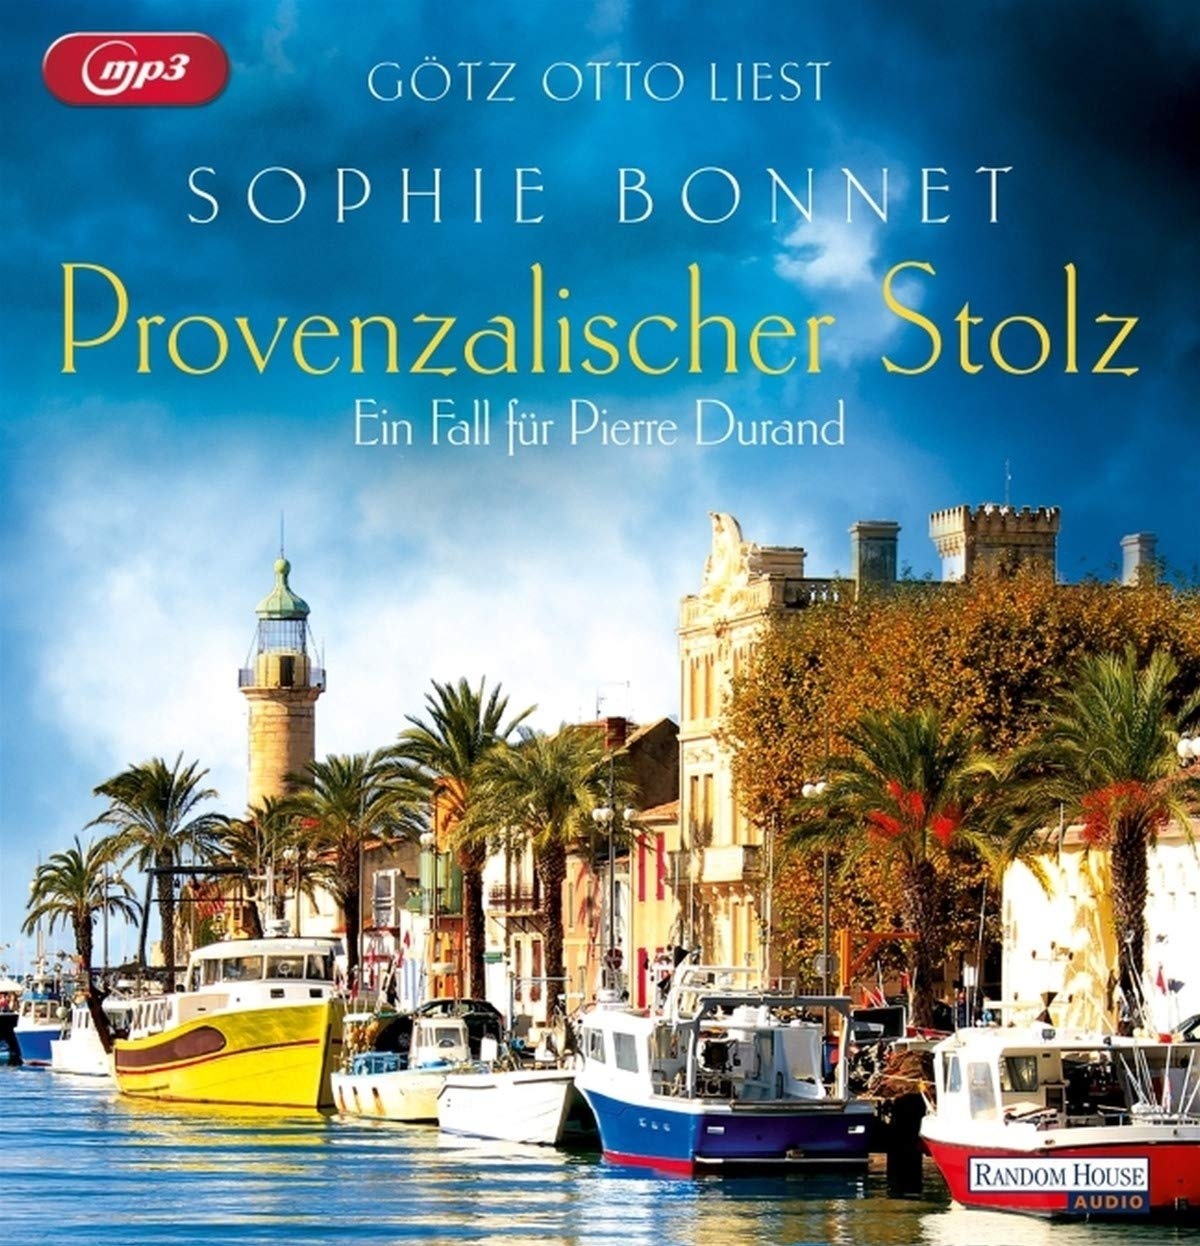 Купить альбом Sophie Bonnet: Provenzalischer Stolz [CD] на компакт-диске по...